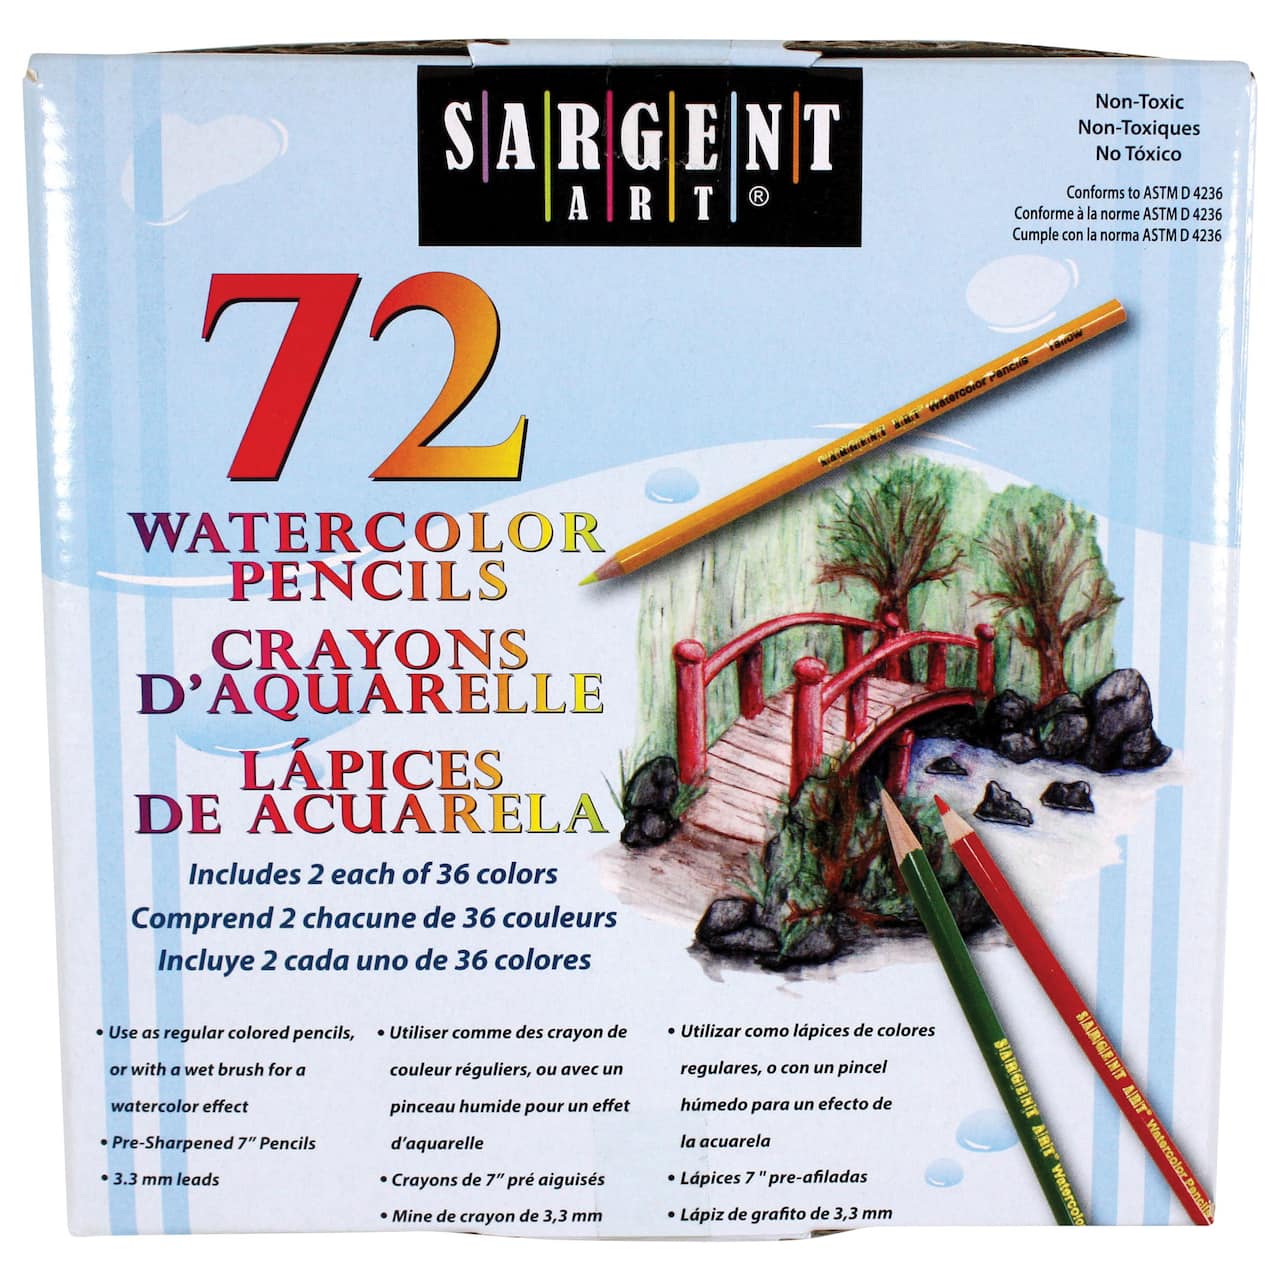 6 Packs: 72 ct. (432 total) Sargent Art® Colored Pencils